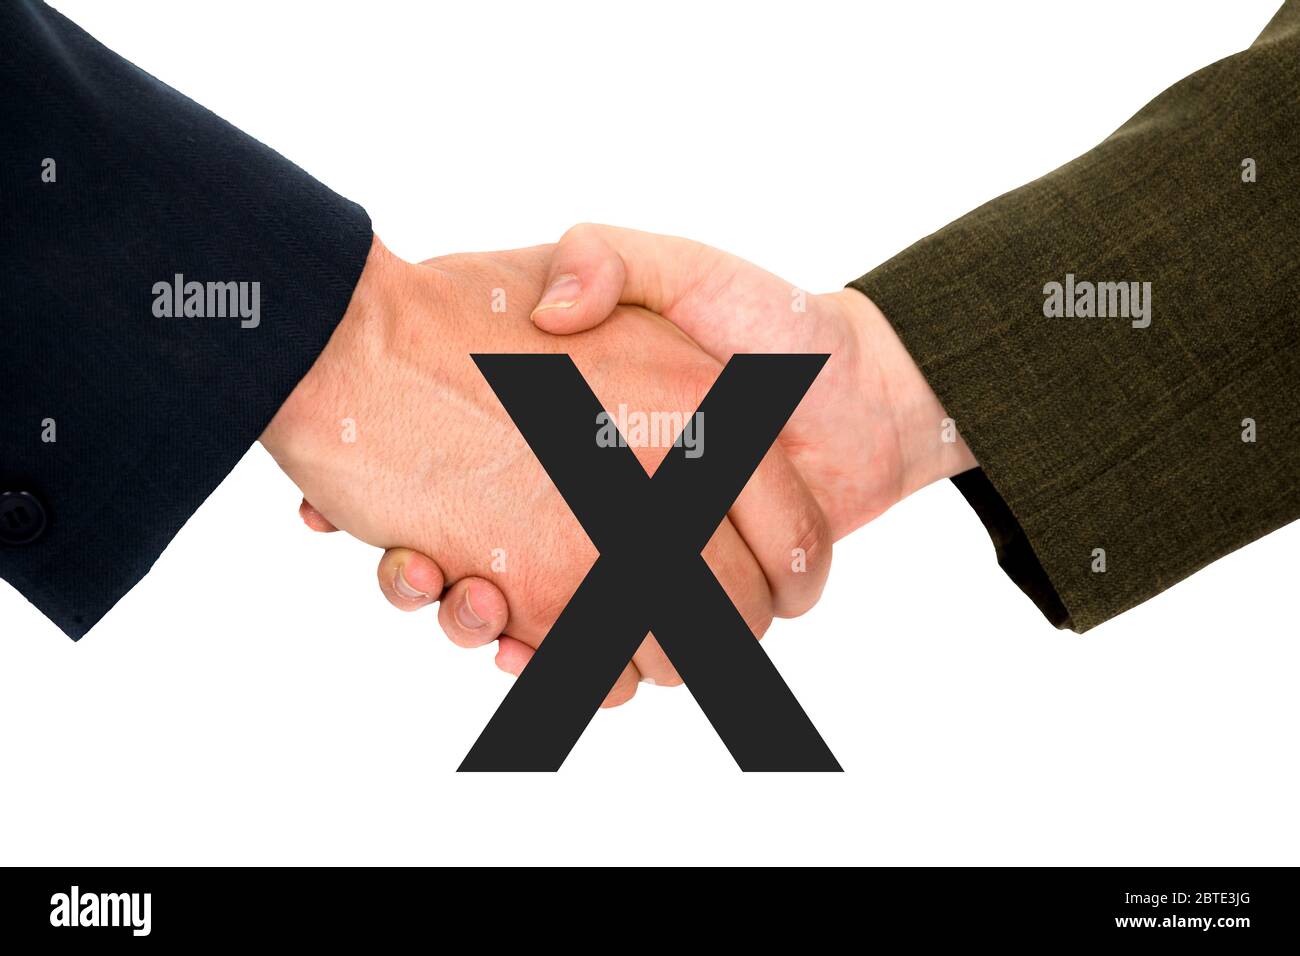 prohibition to shake hands, risk of infection, coronavirus Stock Photo